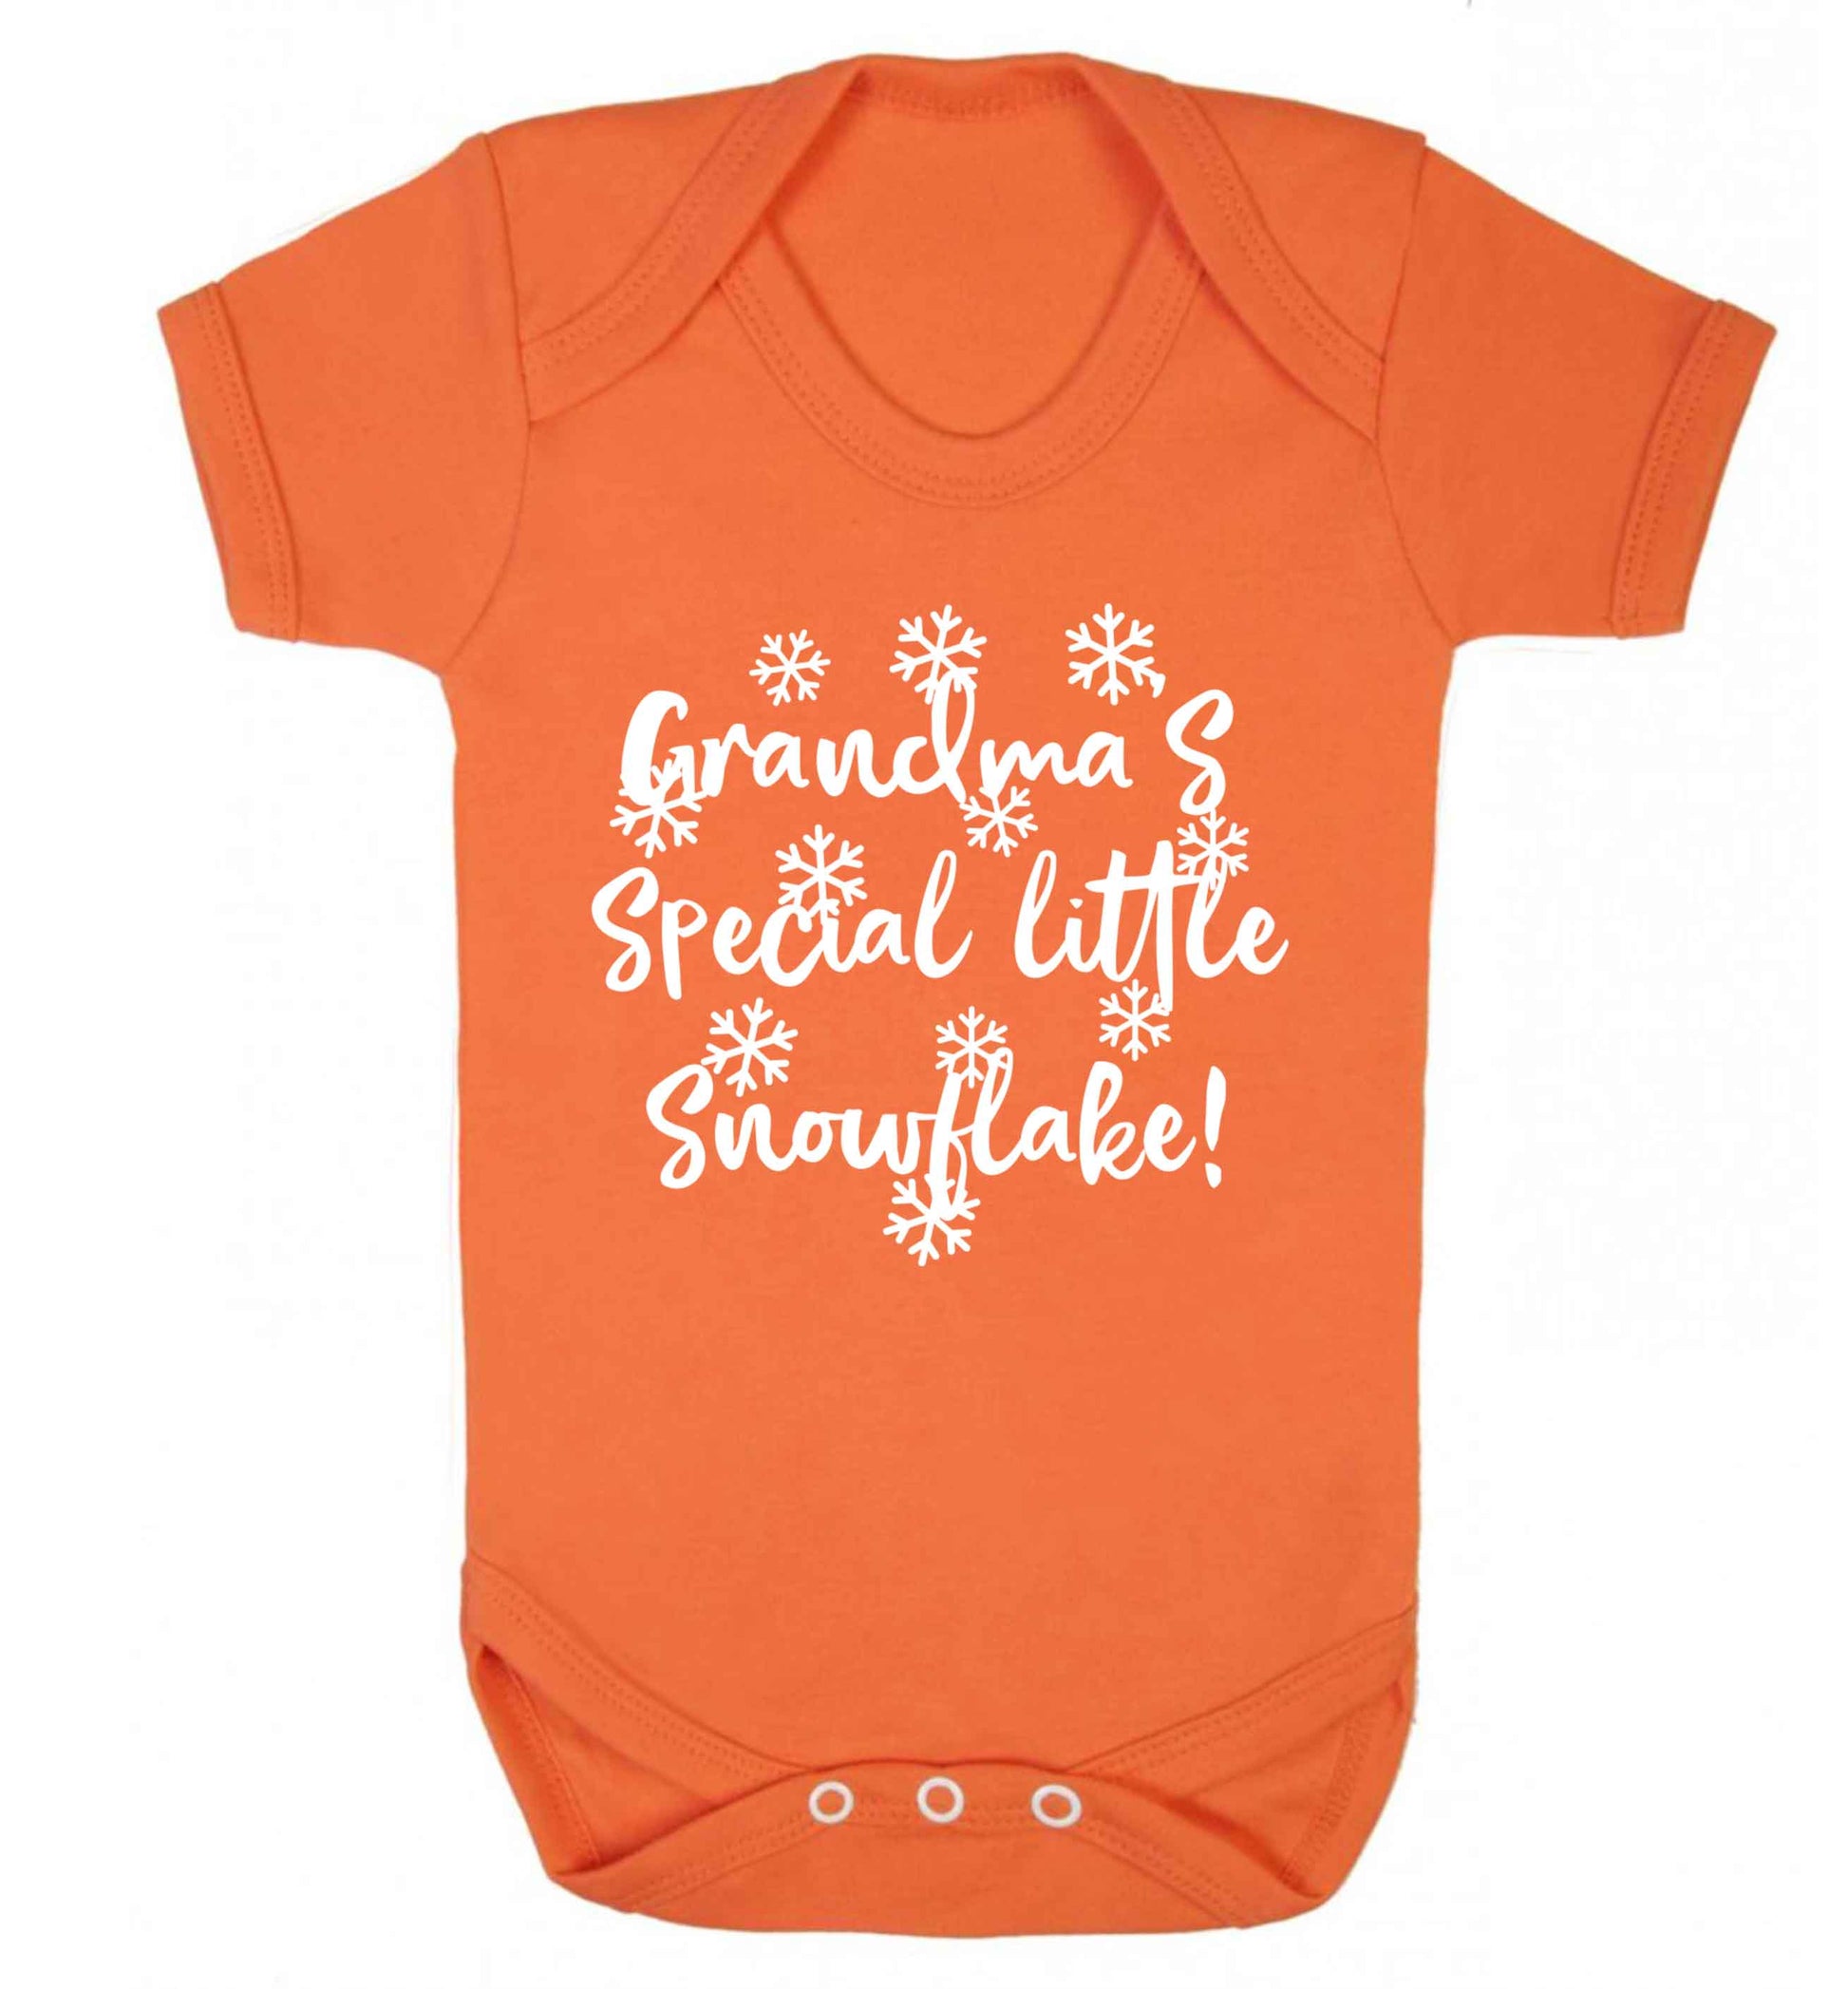 Grandma's special little snowflake Baby Vest orange 18-24 months